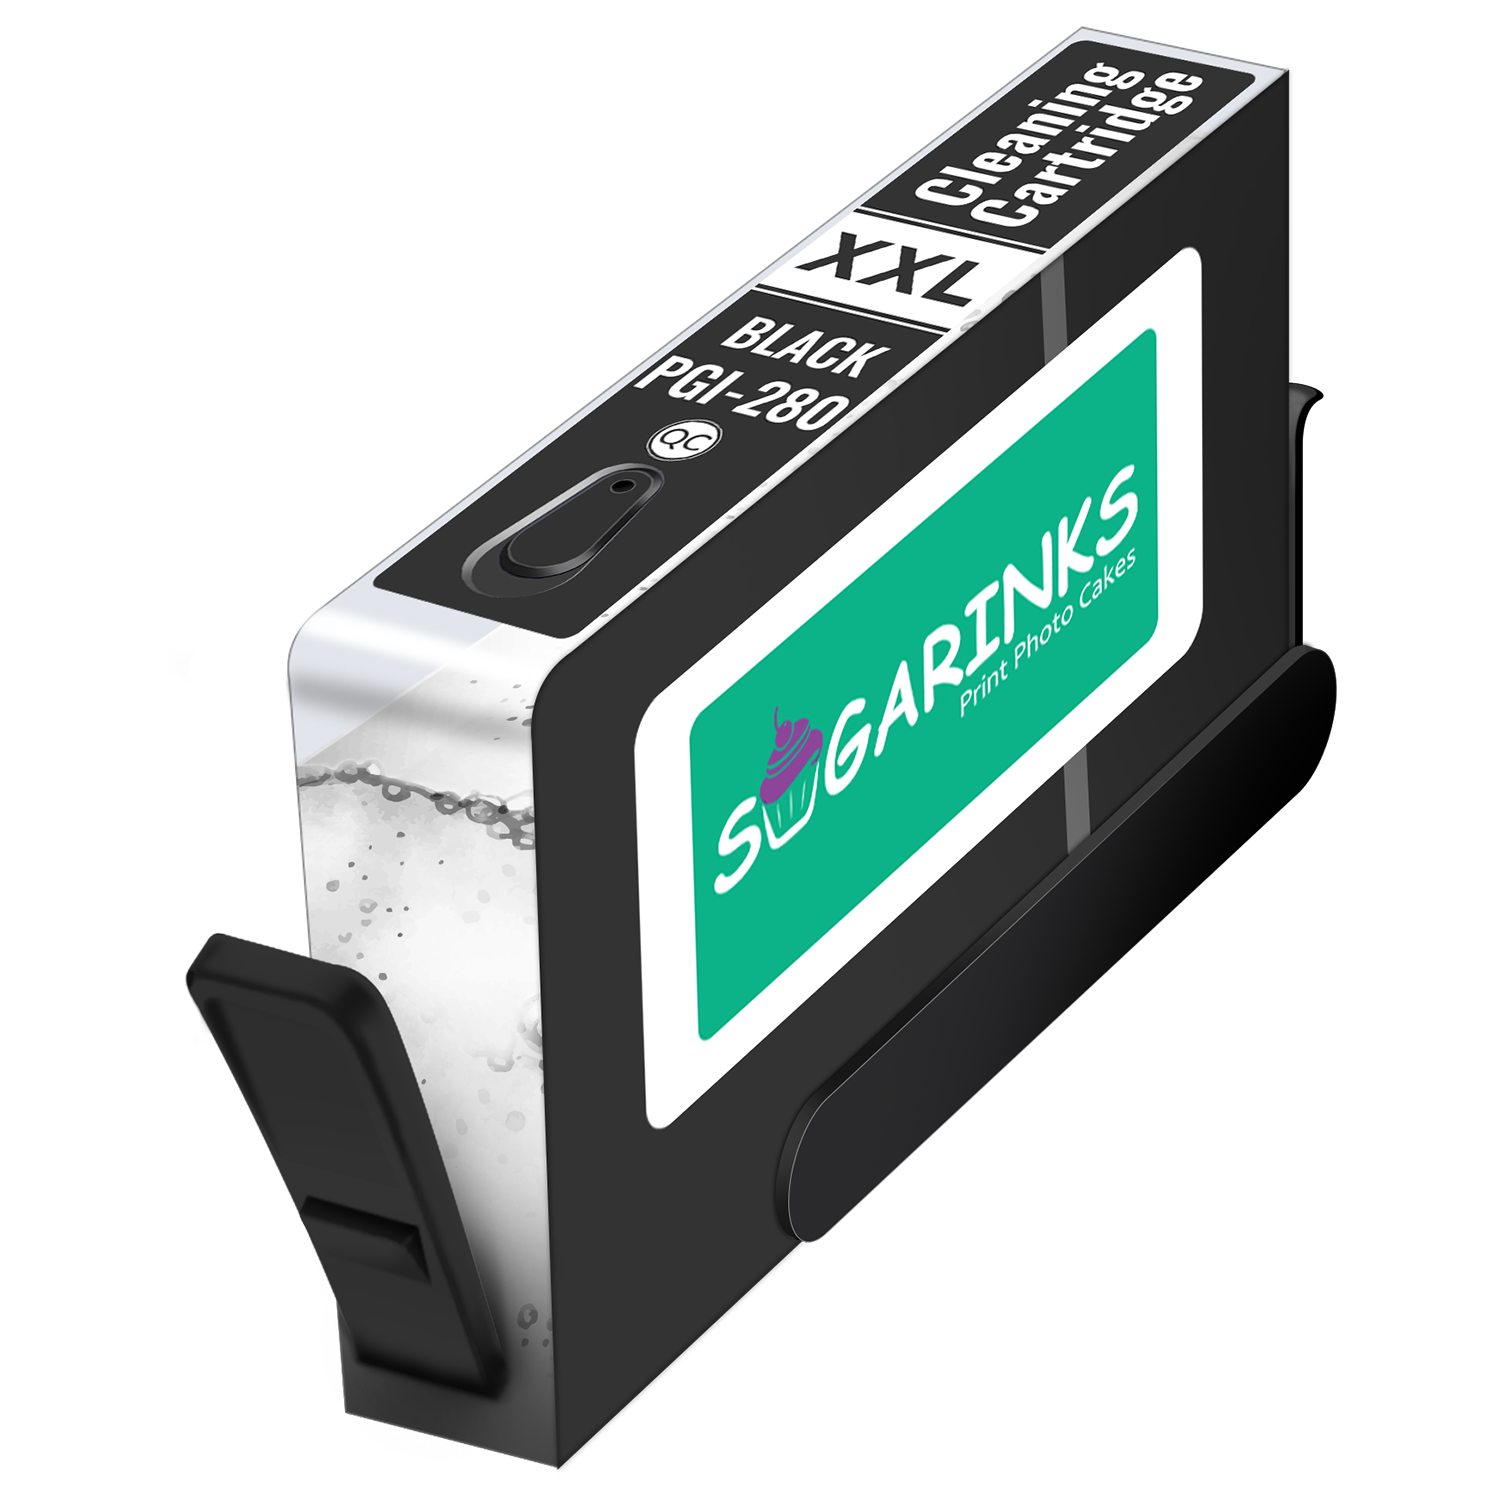 Sugarinks Edible Cleaning Cartridge PGI-280XL for Canon Edible Printer – Black 